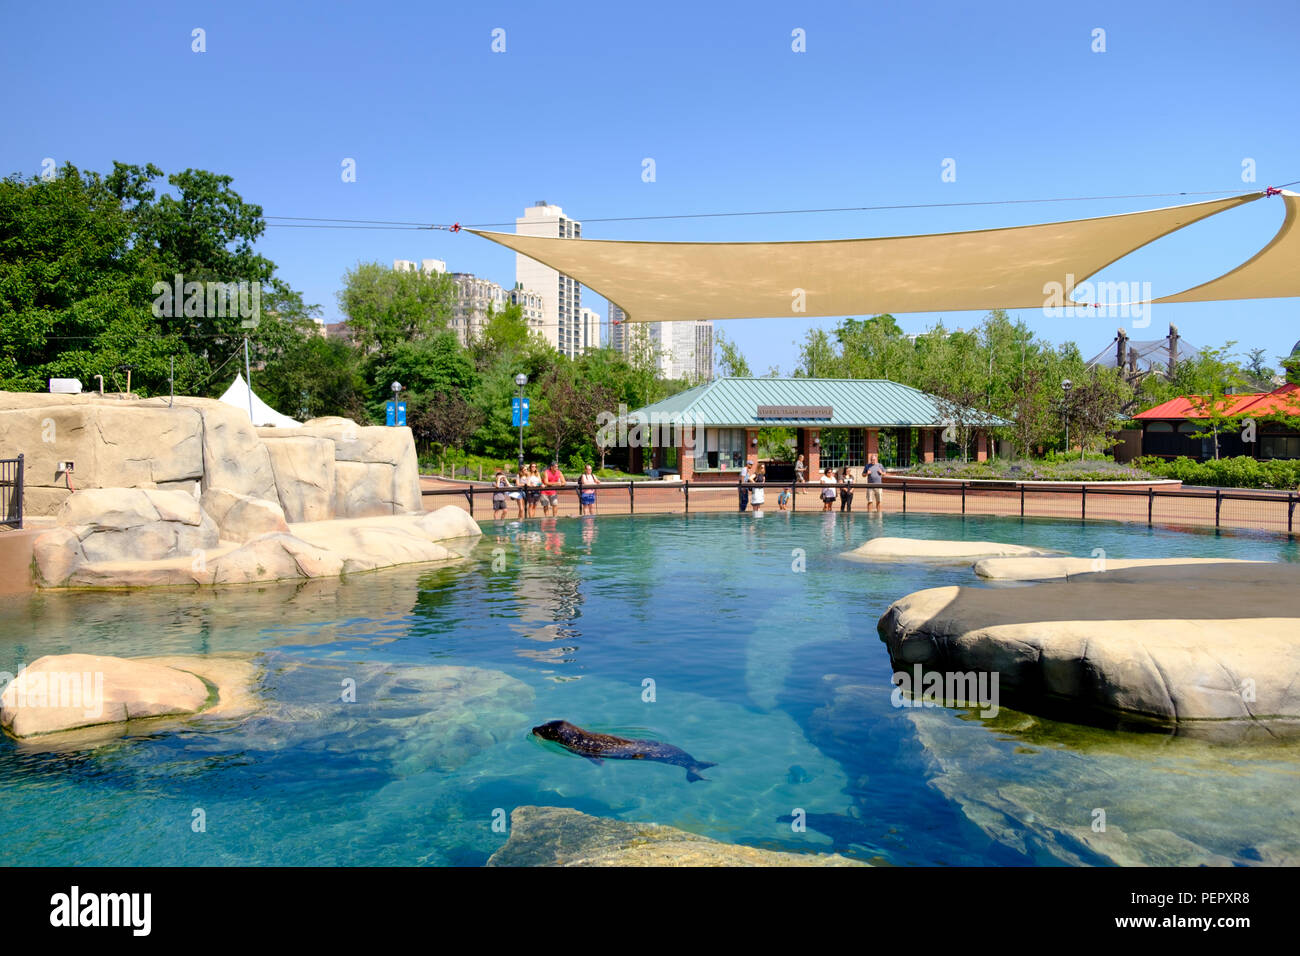 Kovler Dichtung Pool am Lincoln Park Zoo im Sommer, Chicago, Illinois, USA  Stockfotografie - Alamy